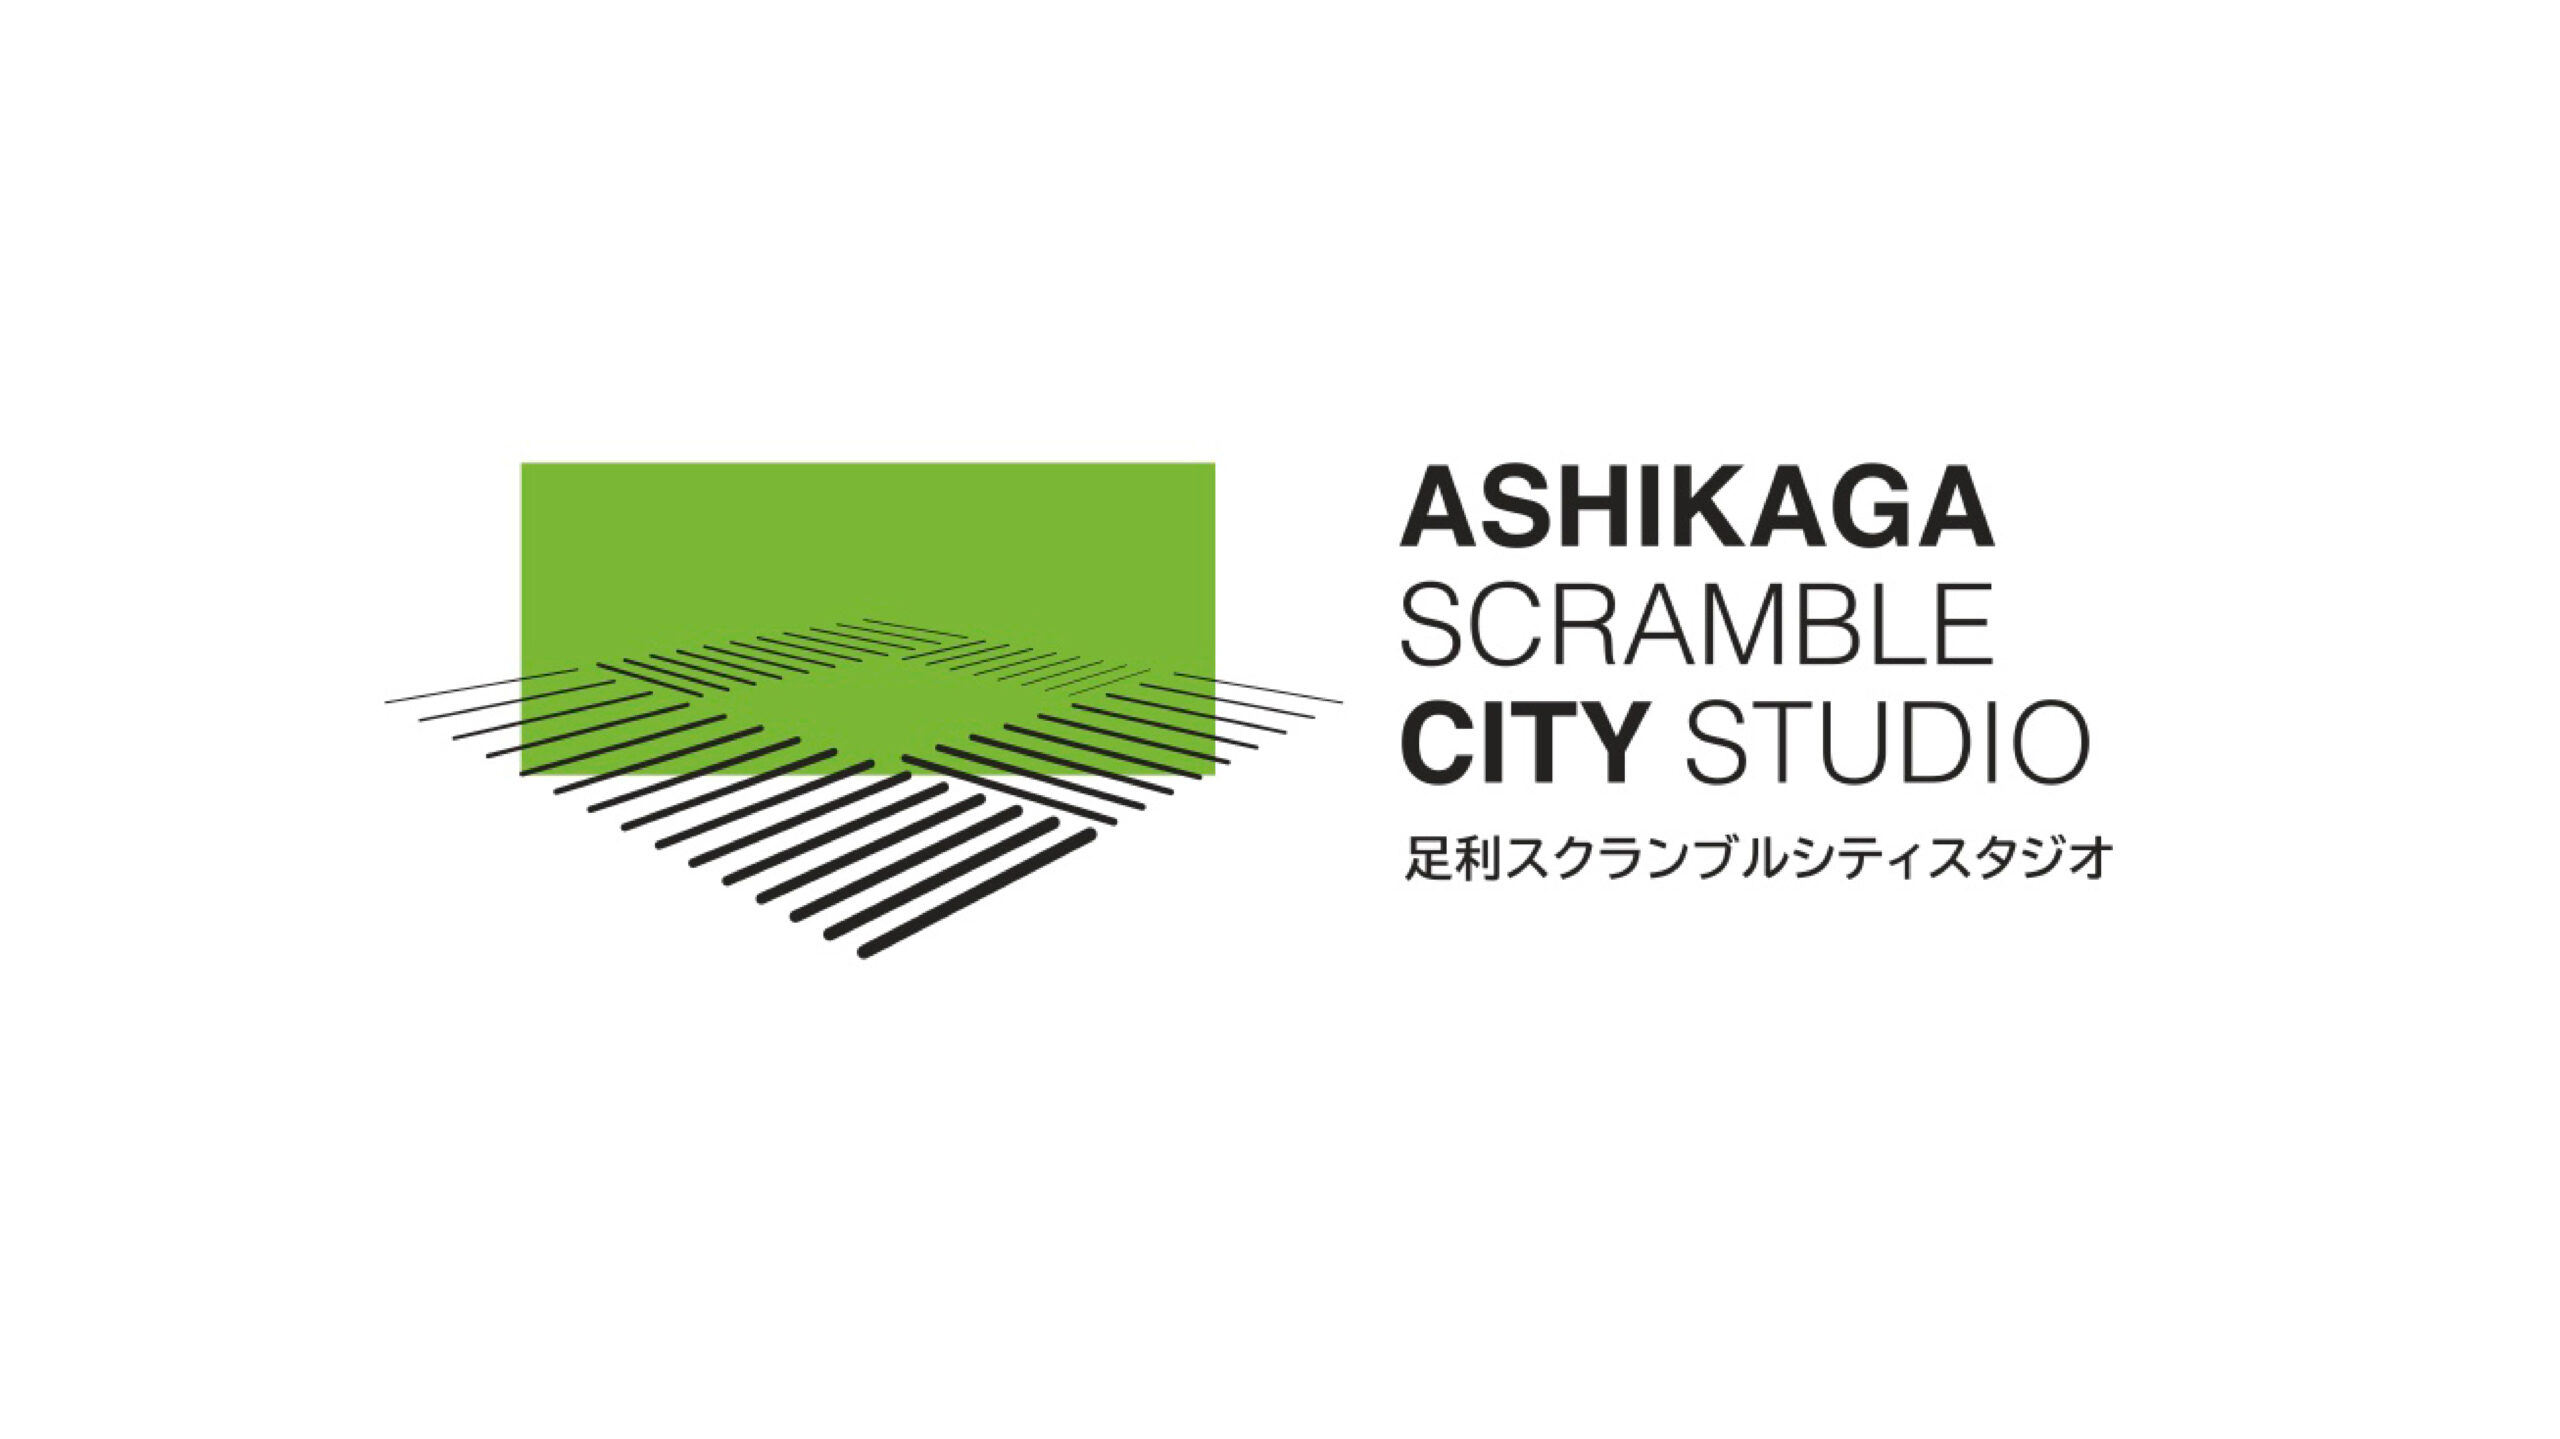 Ashikaga Scramble City Studio was featured on NHK’s TV show “Asaichi”.